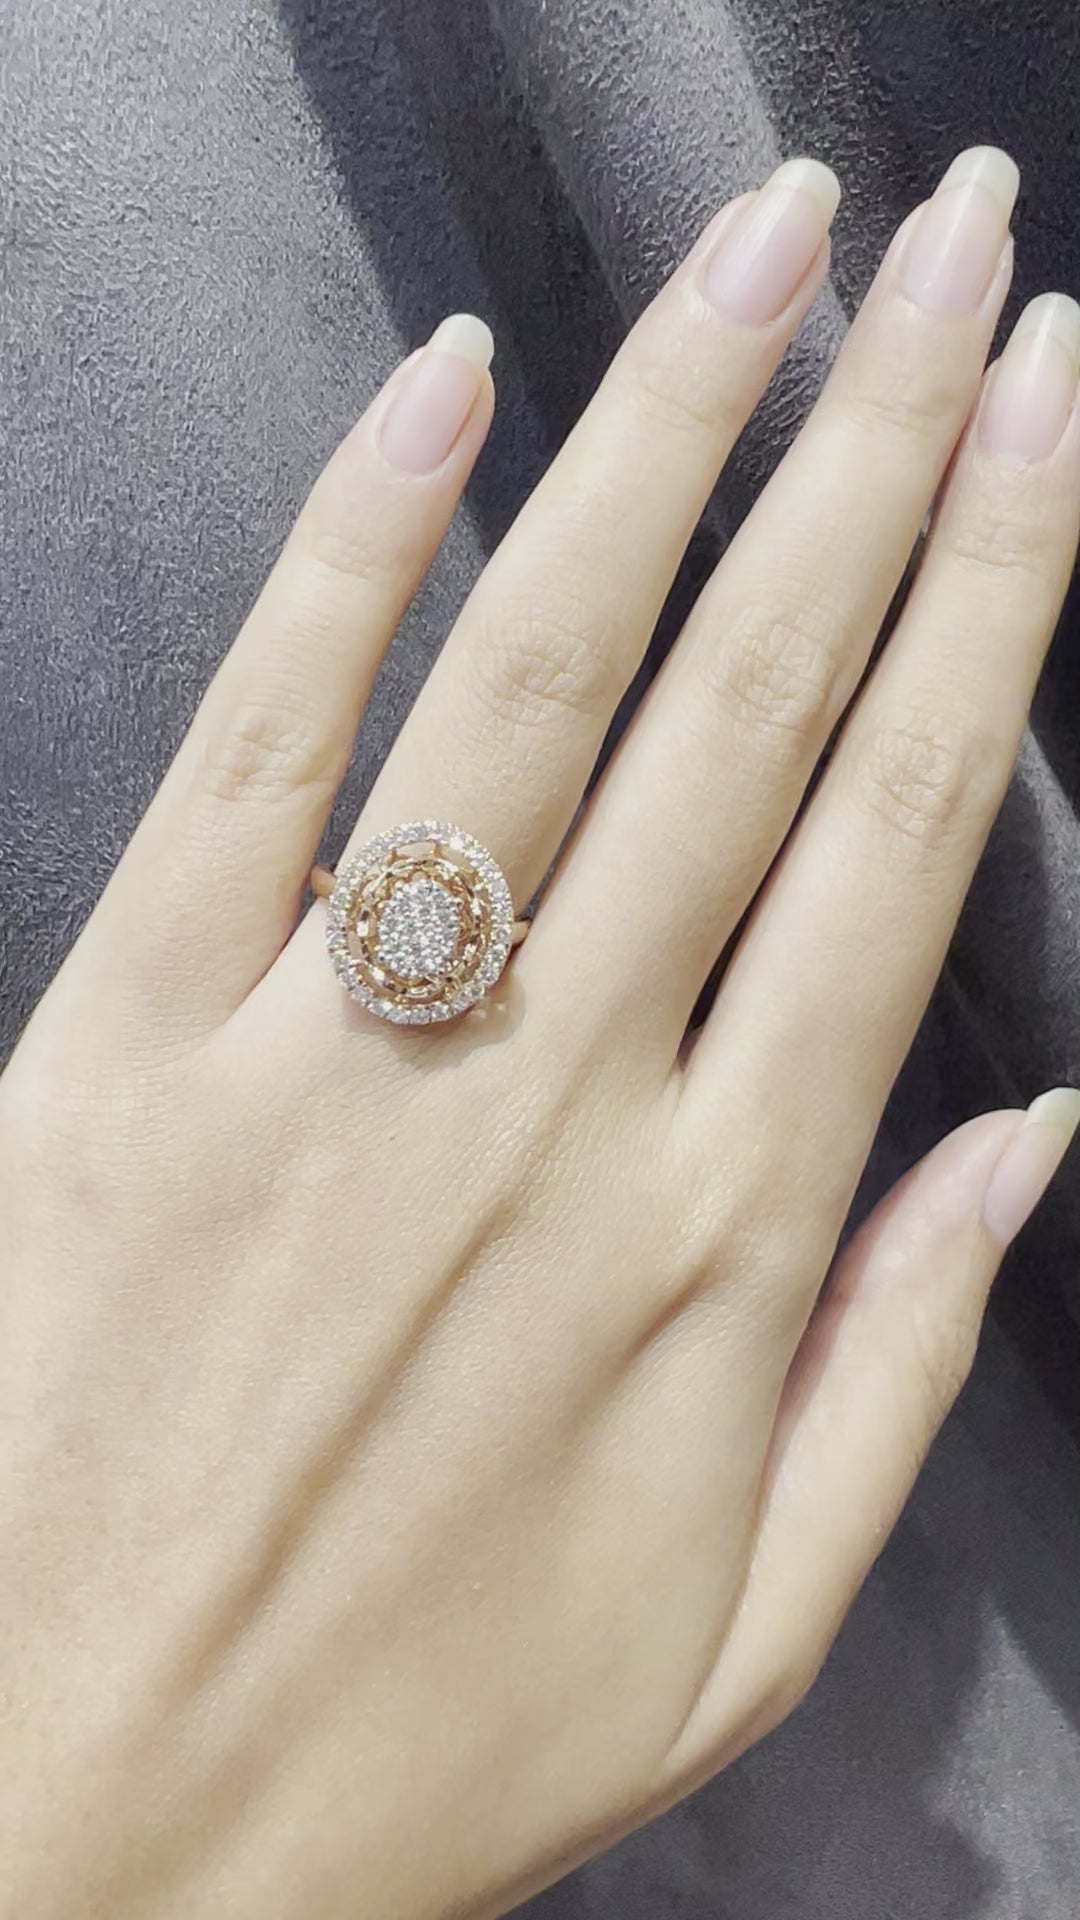 The Oval Brilliance Diamond Ring